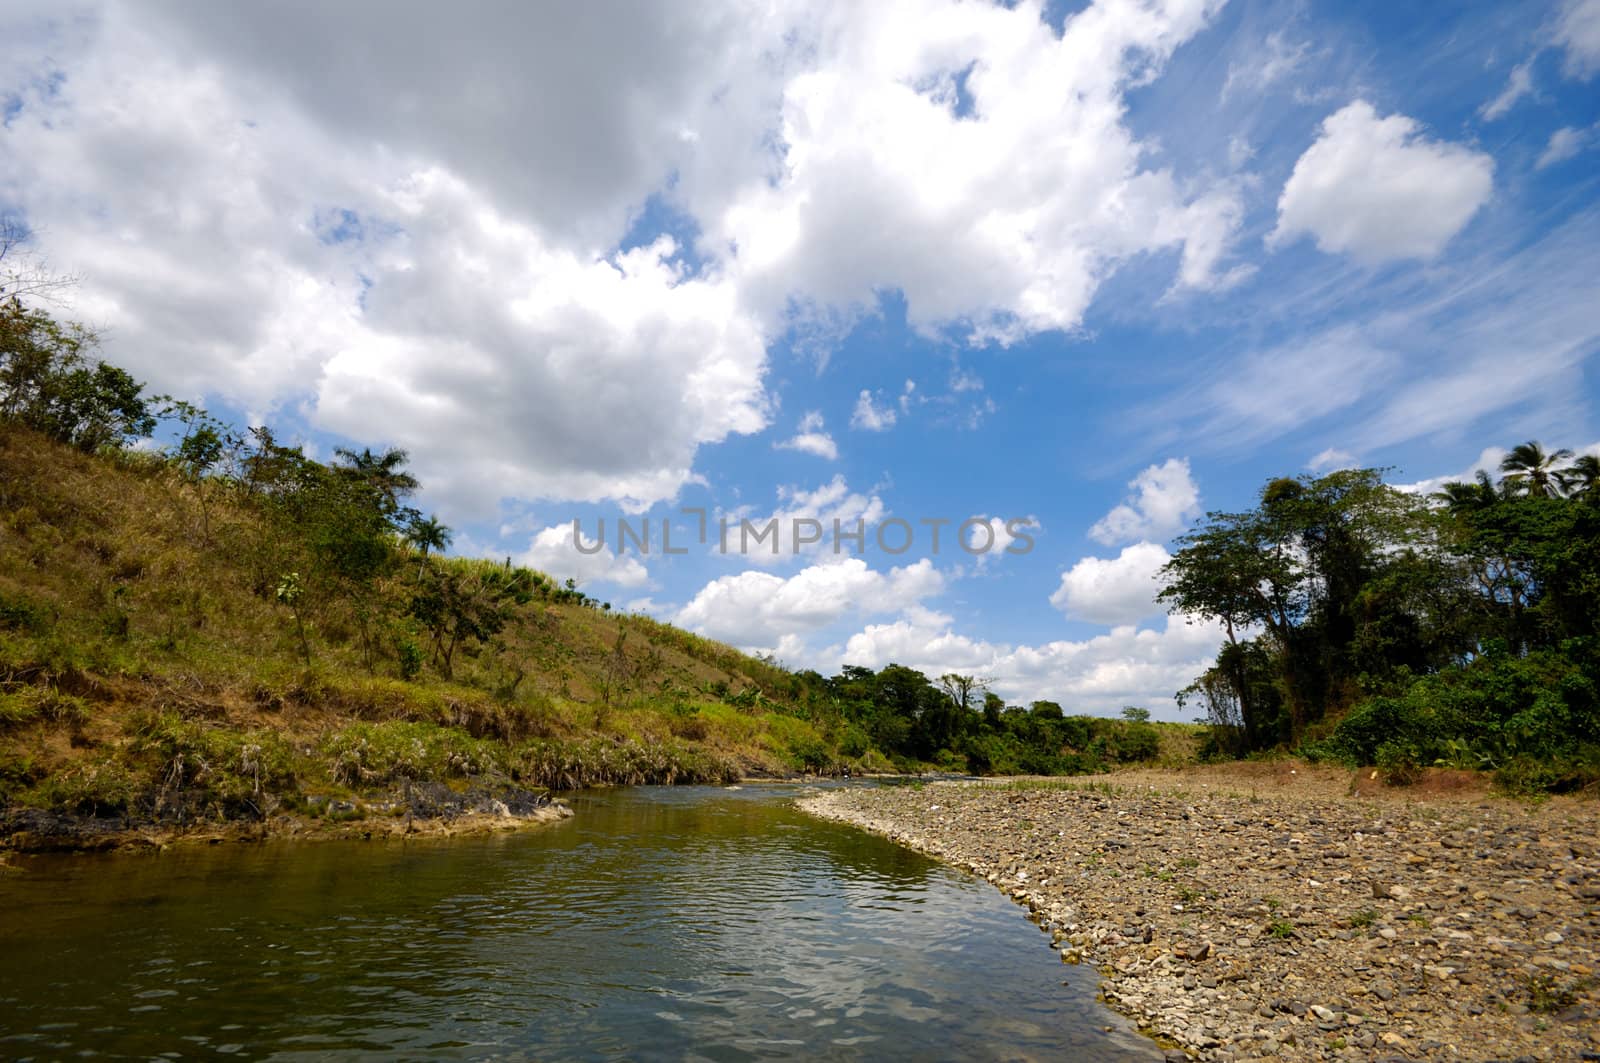 Landscape and river by cfoto